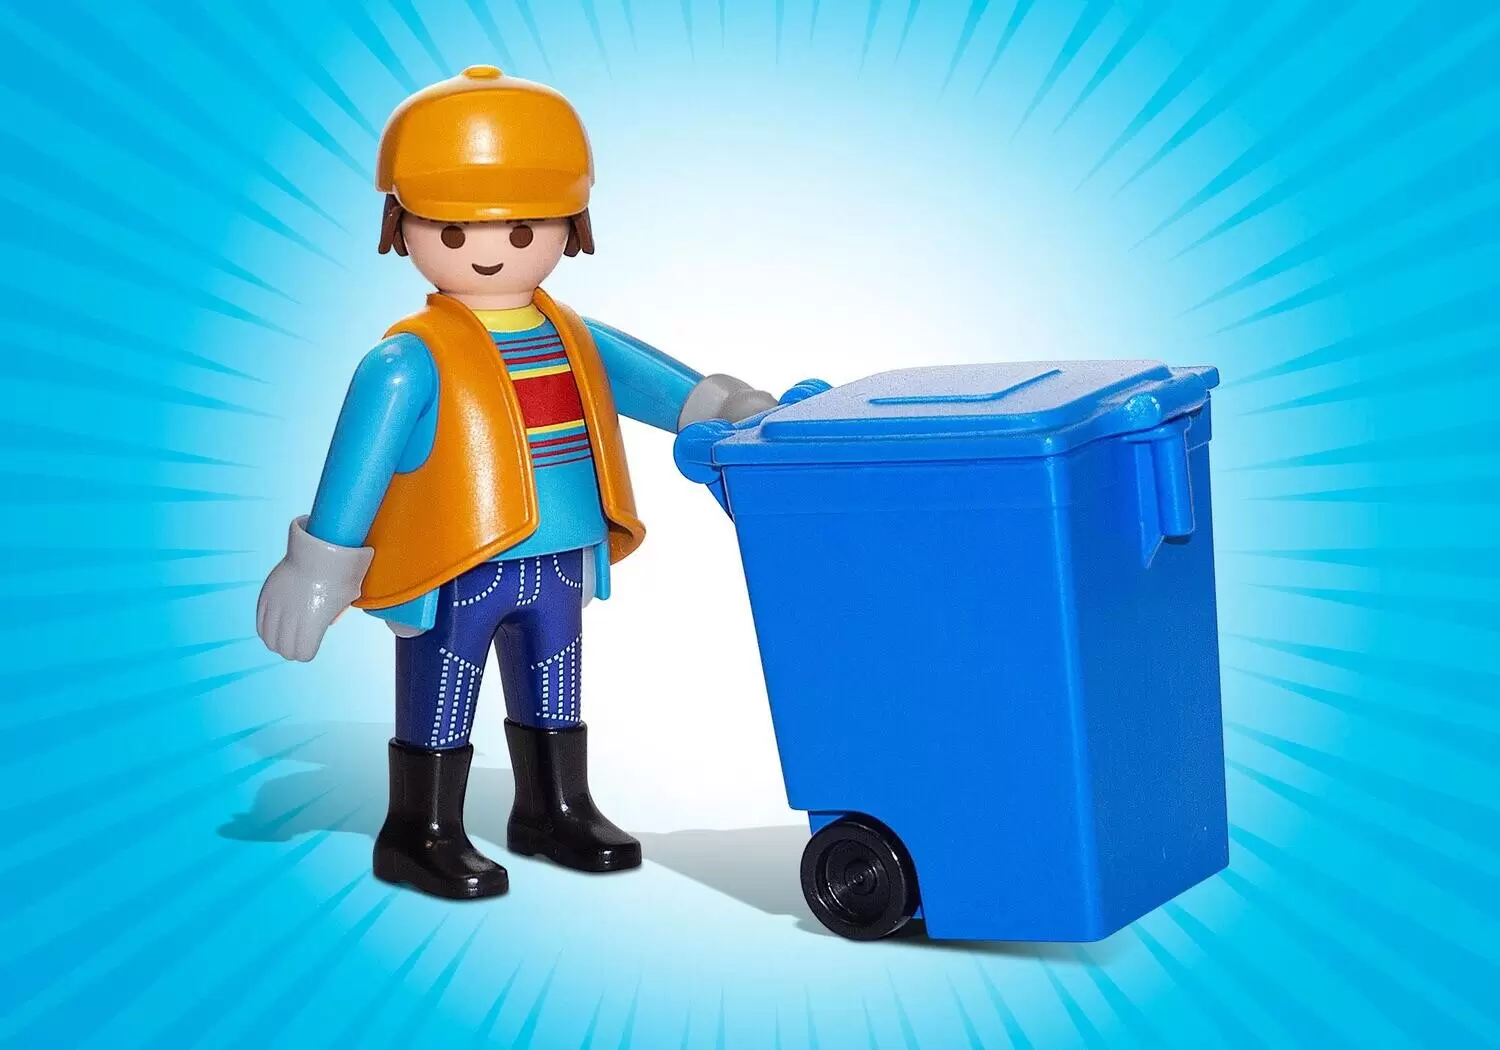 Playmobil Special Edition (SonderFigur) - Garbage collector